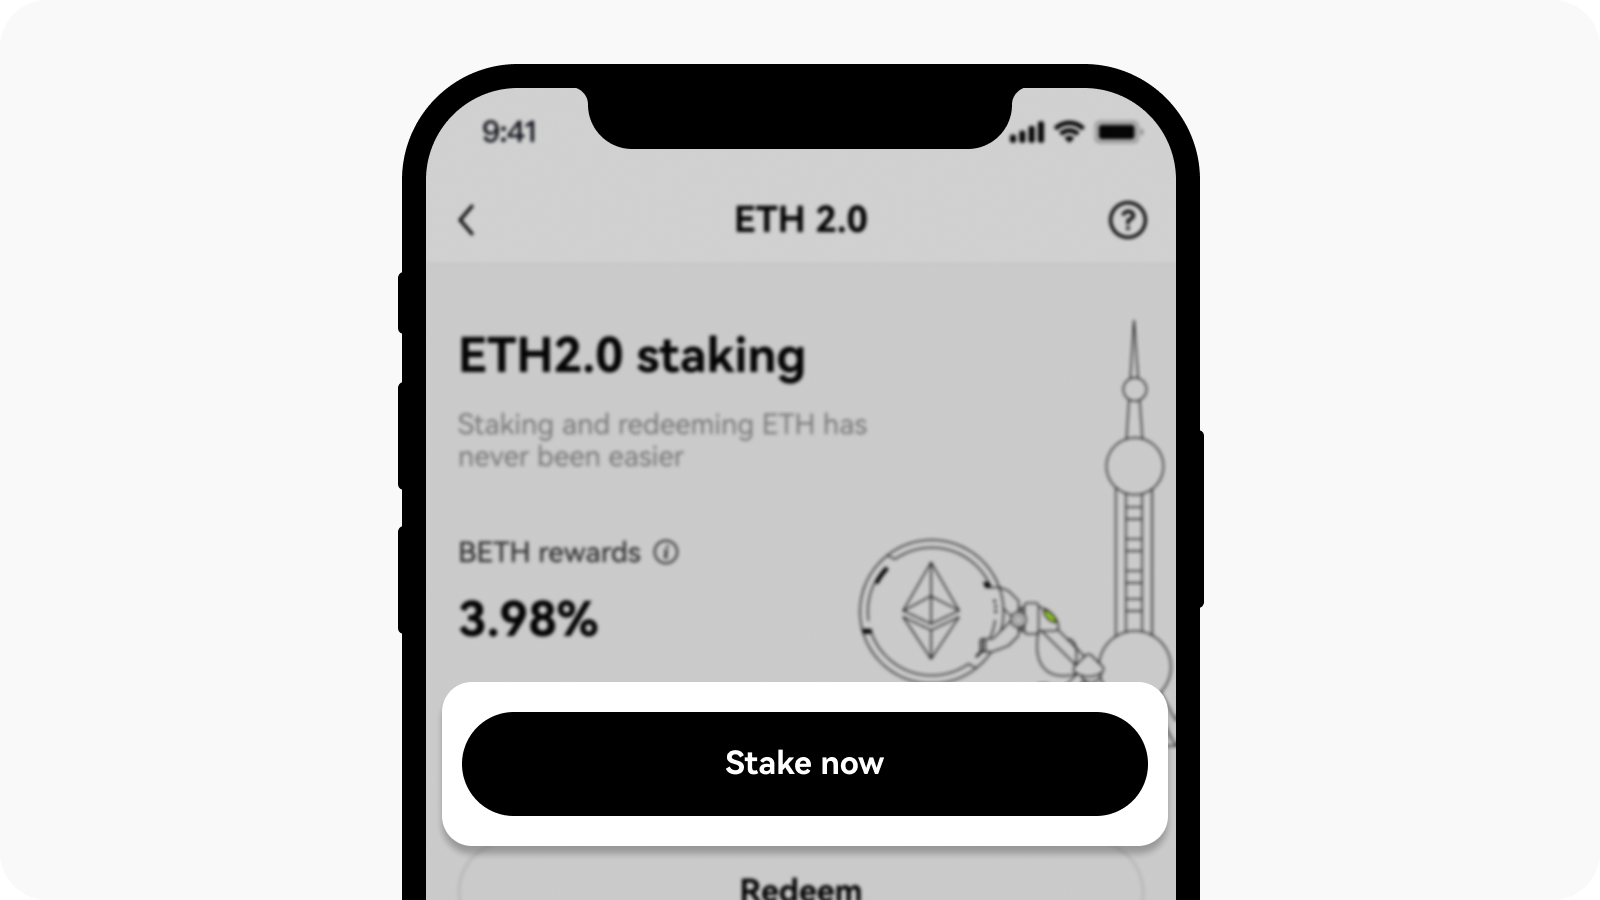 CT-app-onchain earn-ETH2.0 banner